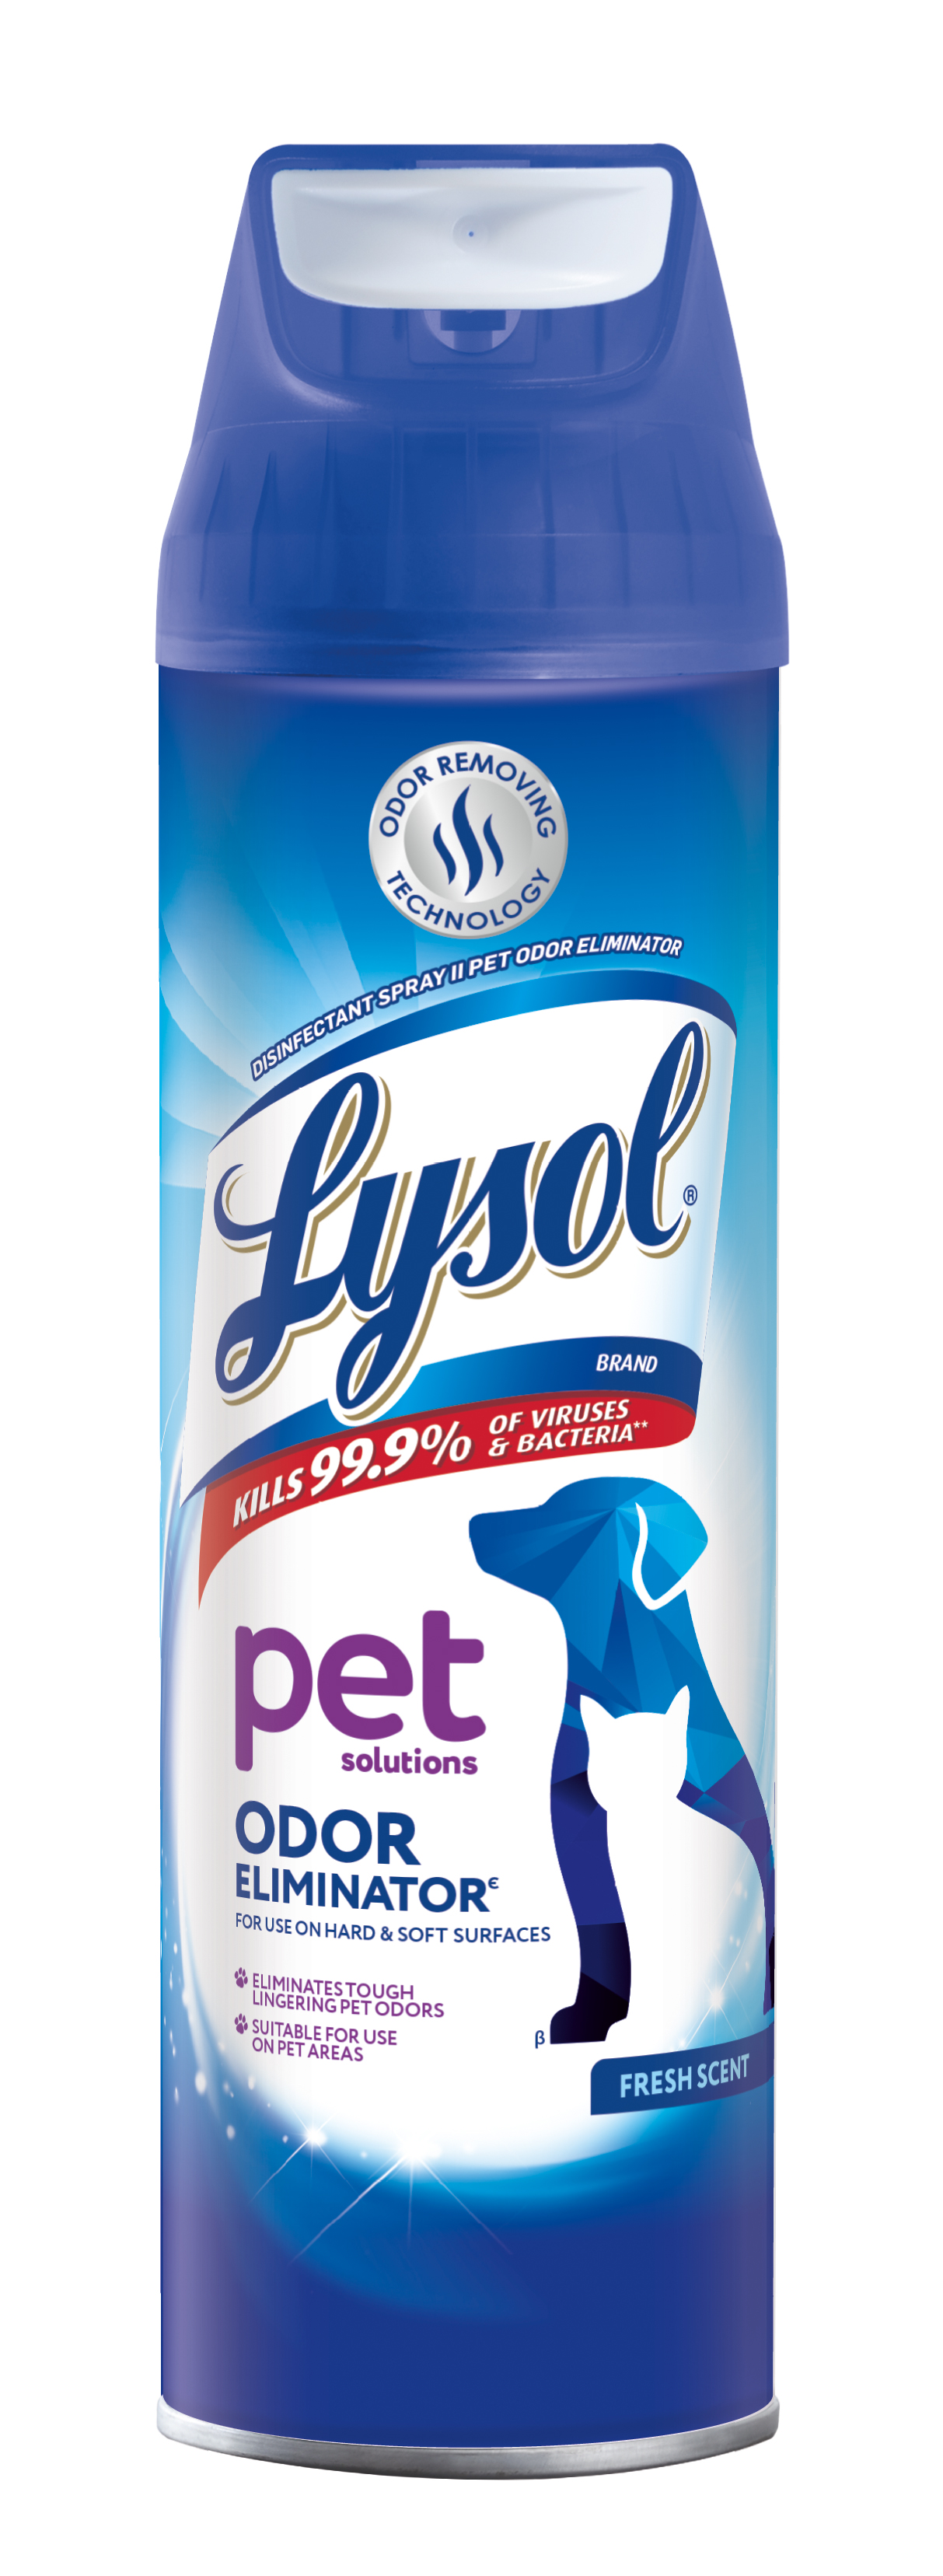 LYSOL® Pet Solutions Odor Eliminator - Fresh